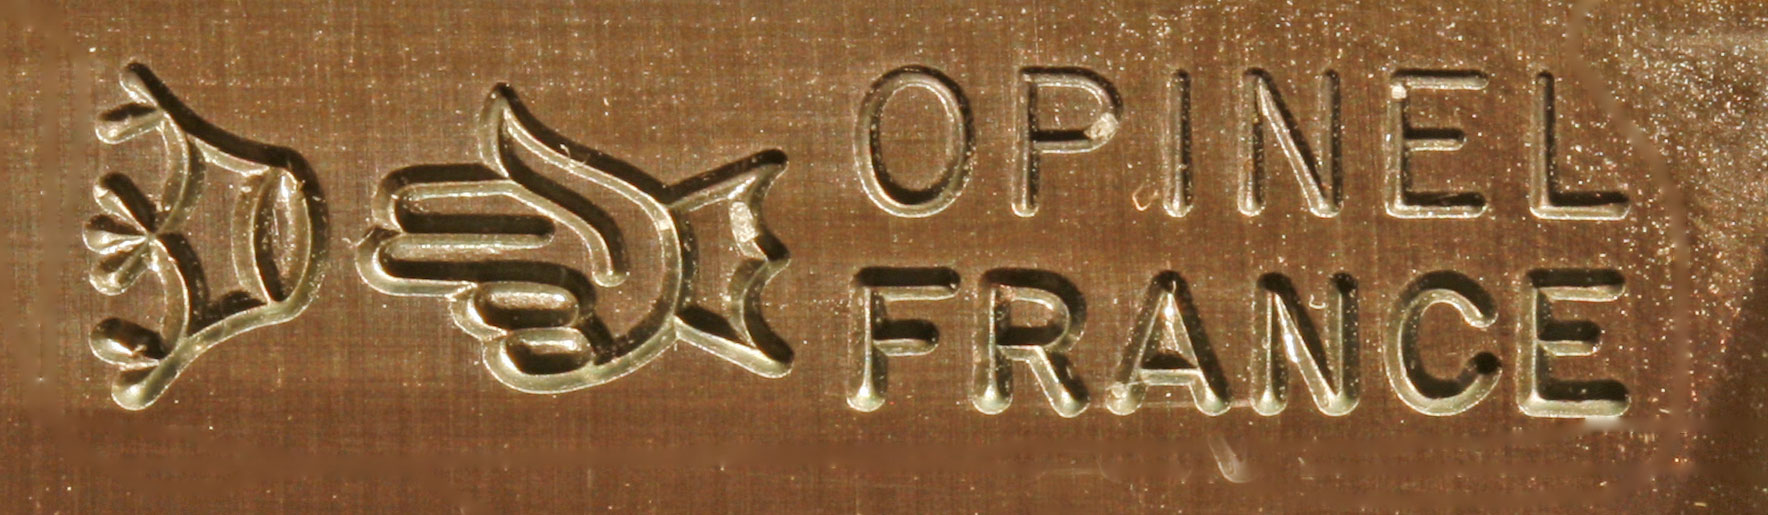 Opinel Logo